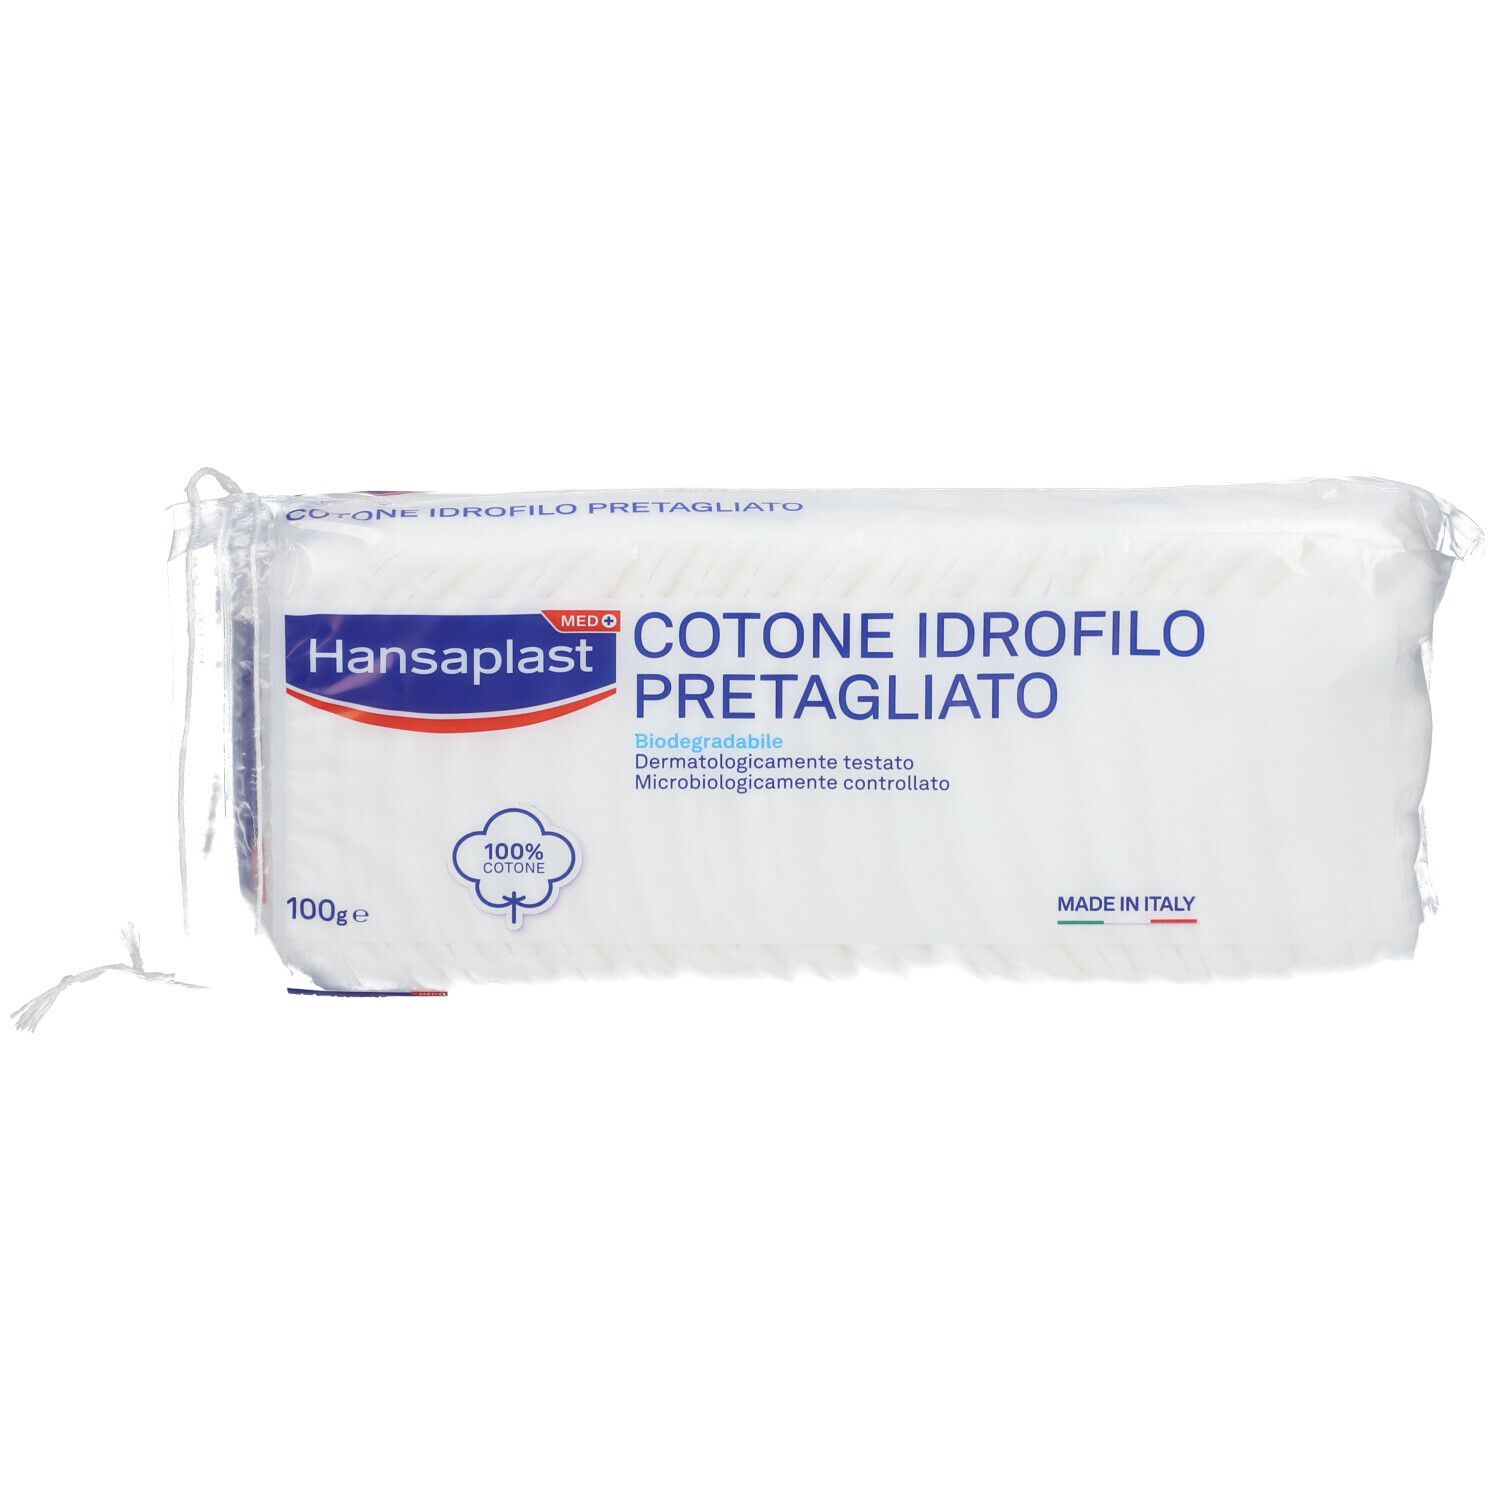 Image of Hansaplast Cotone Idrofilo Pretagliato